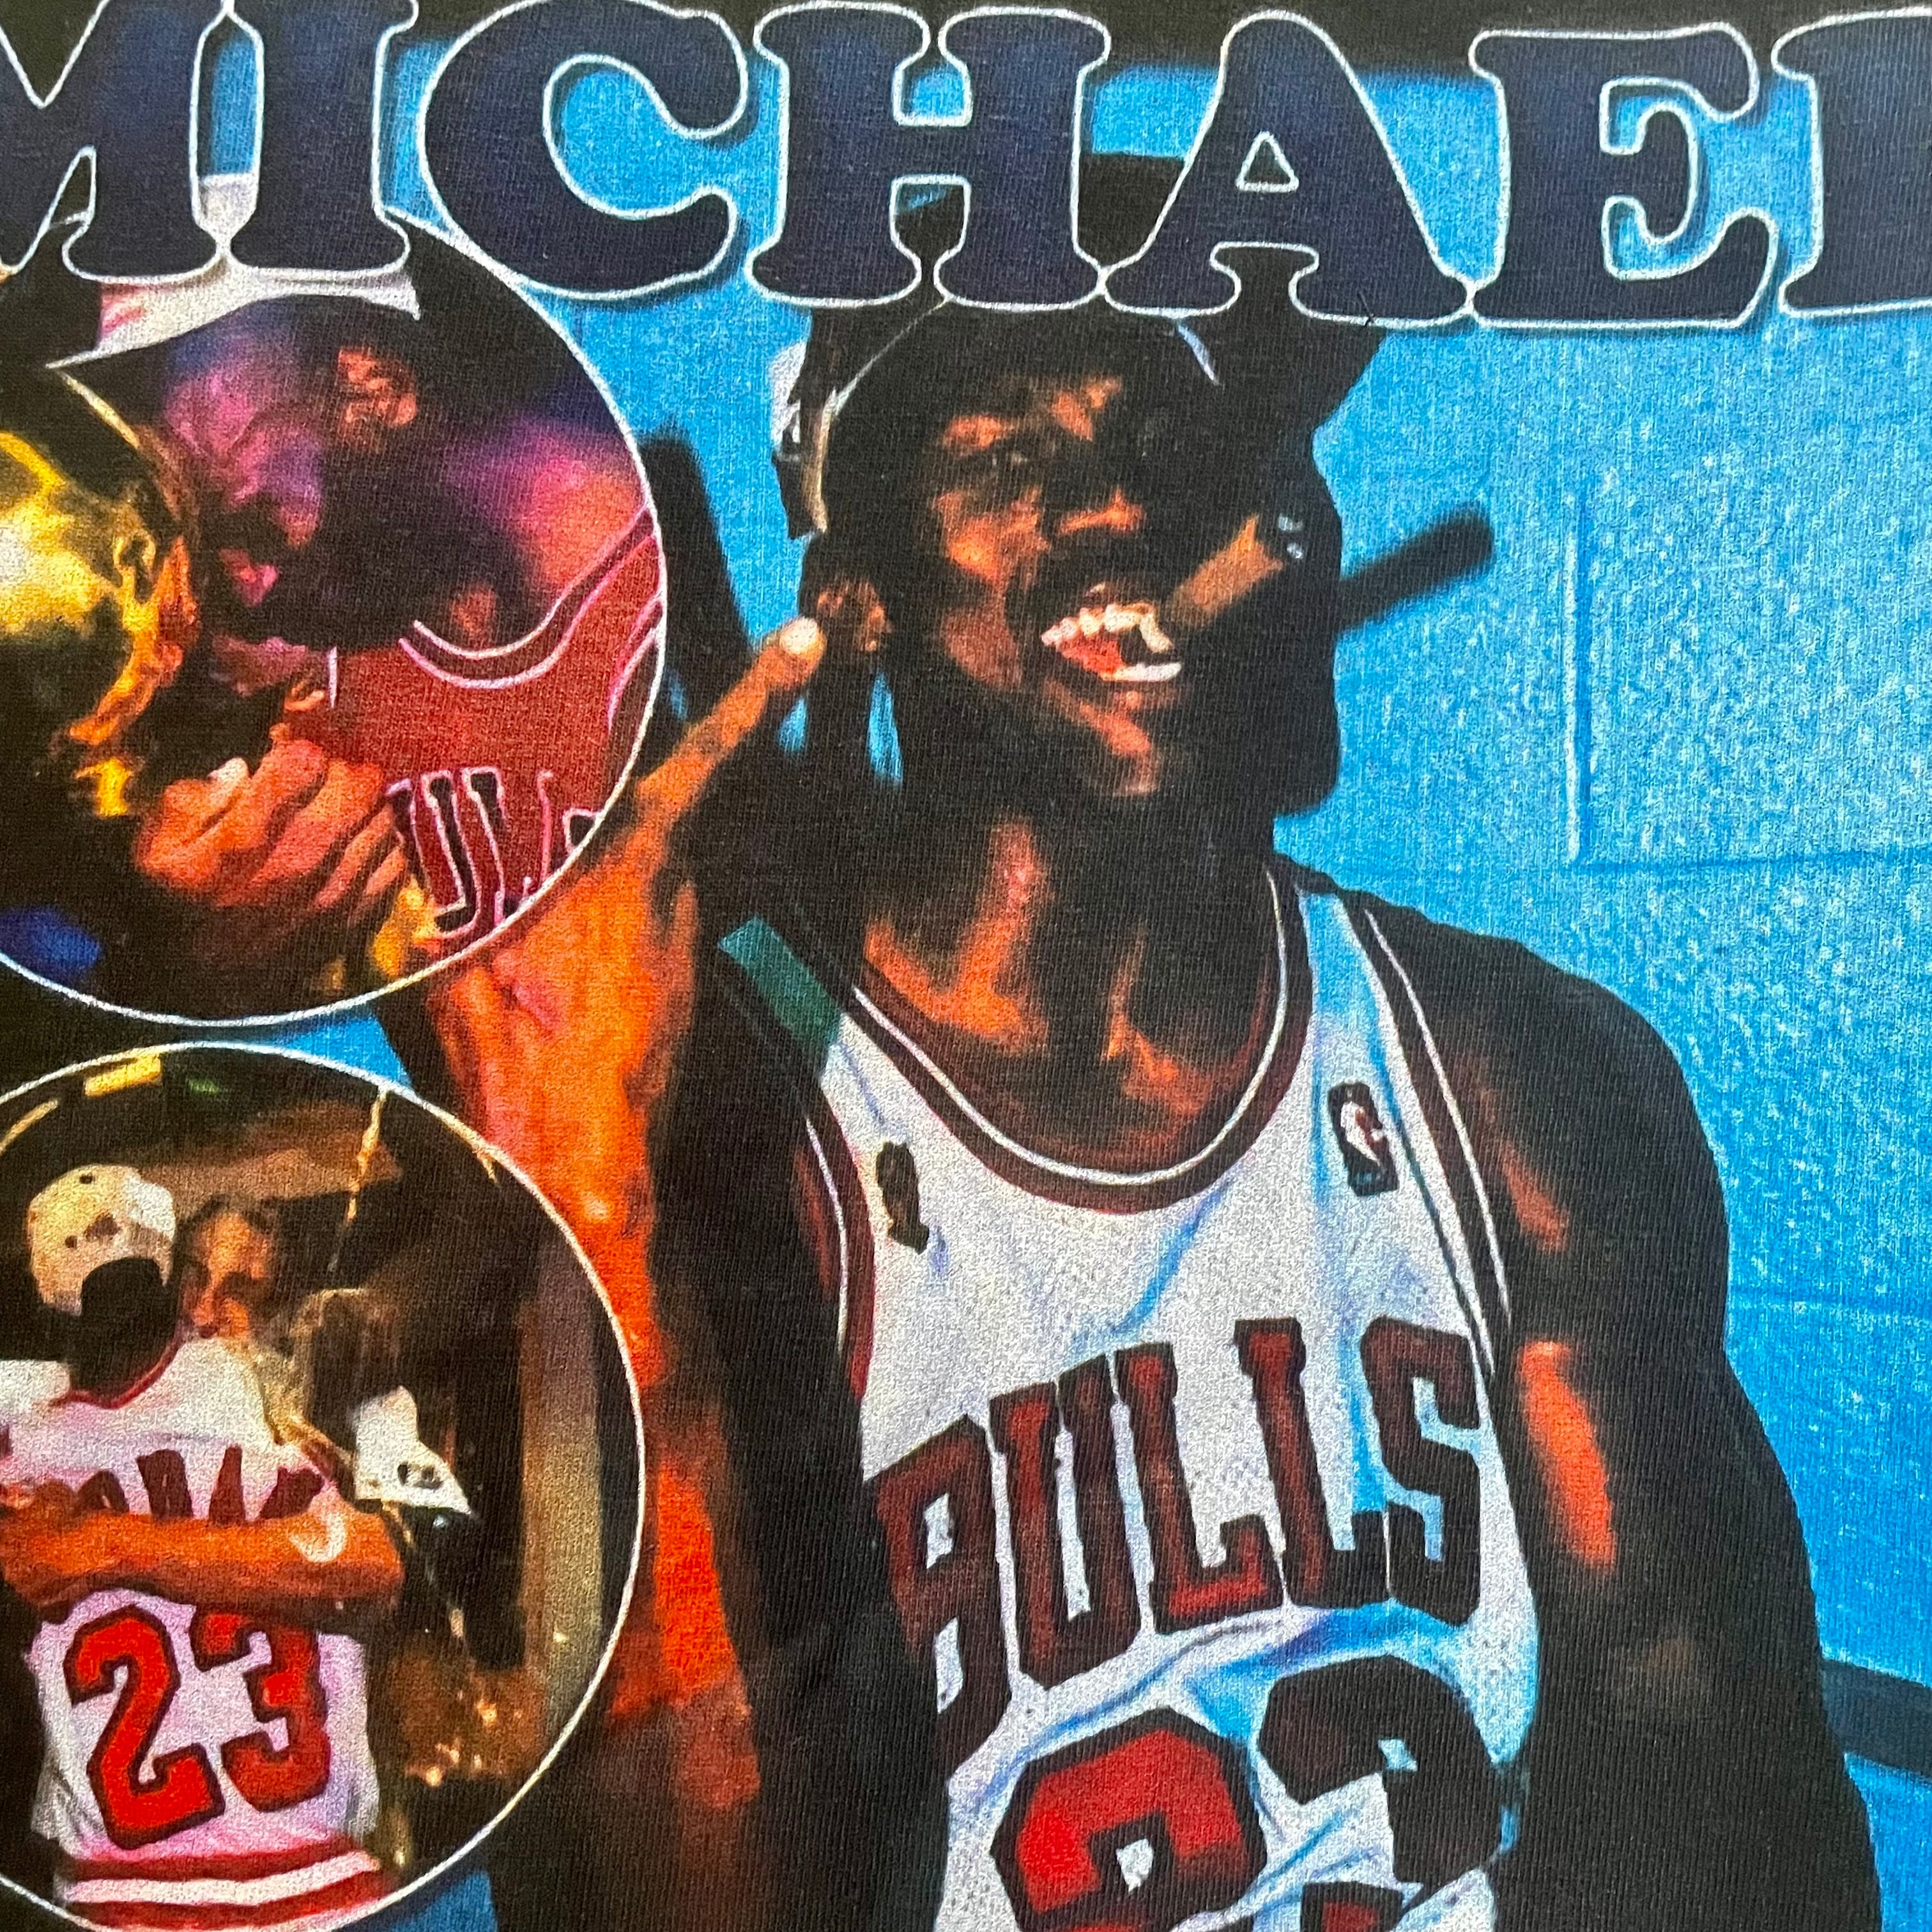 Michael Jordan Tシャツ NBA マイケルジョーダン バスケ basketball